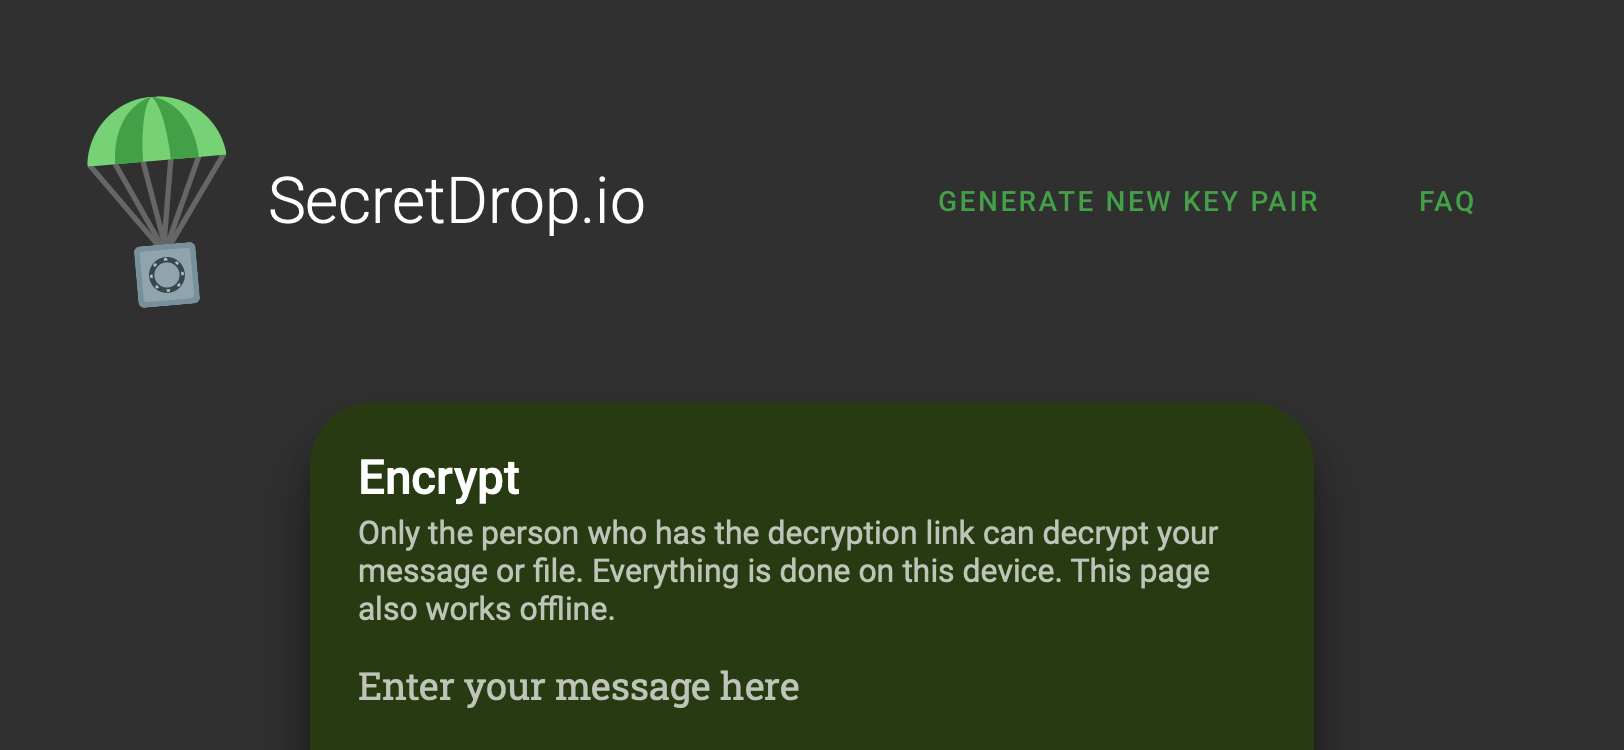 main-test-ts-encrypt-decrypt-encrypt-page-file-encryption-screenshot-812-375-0-snap.png